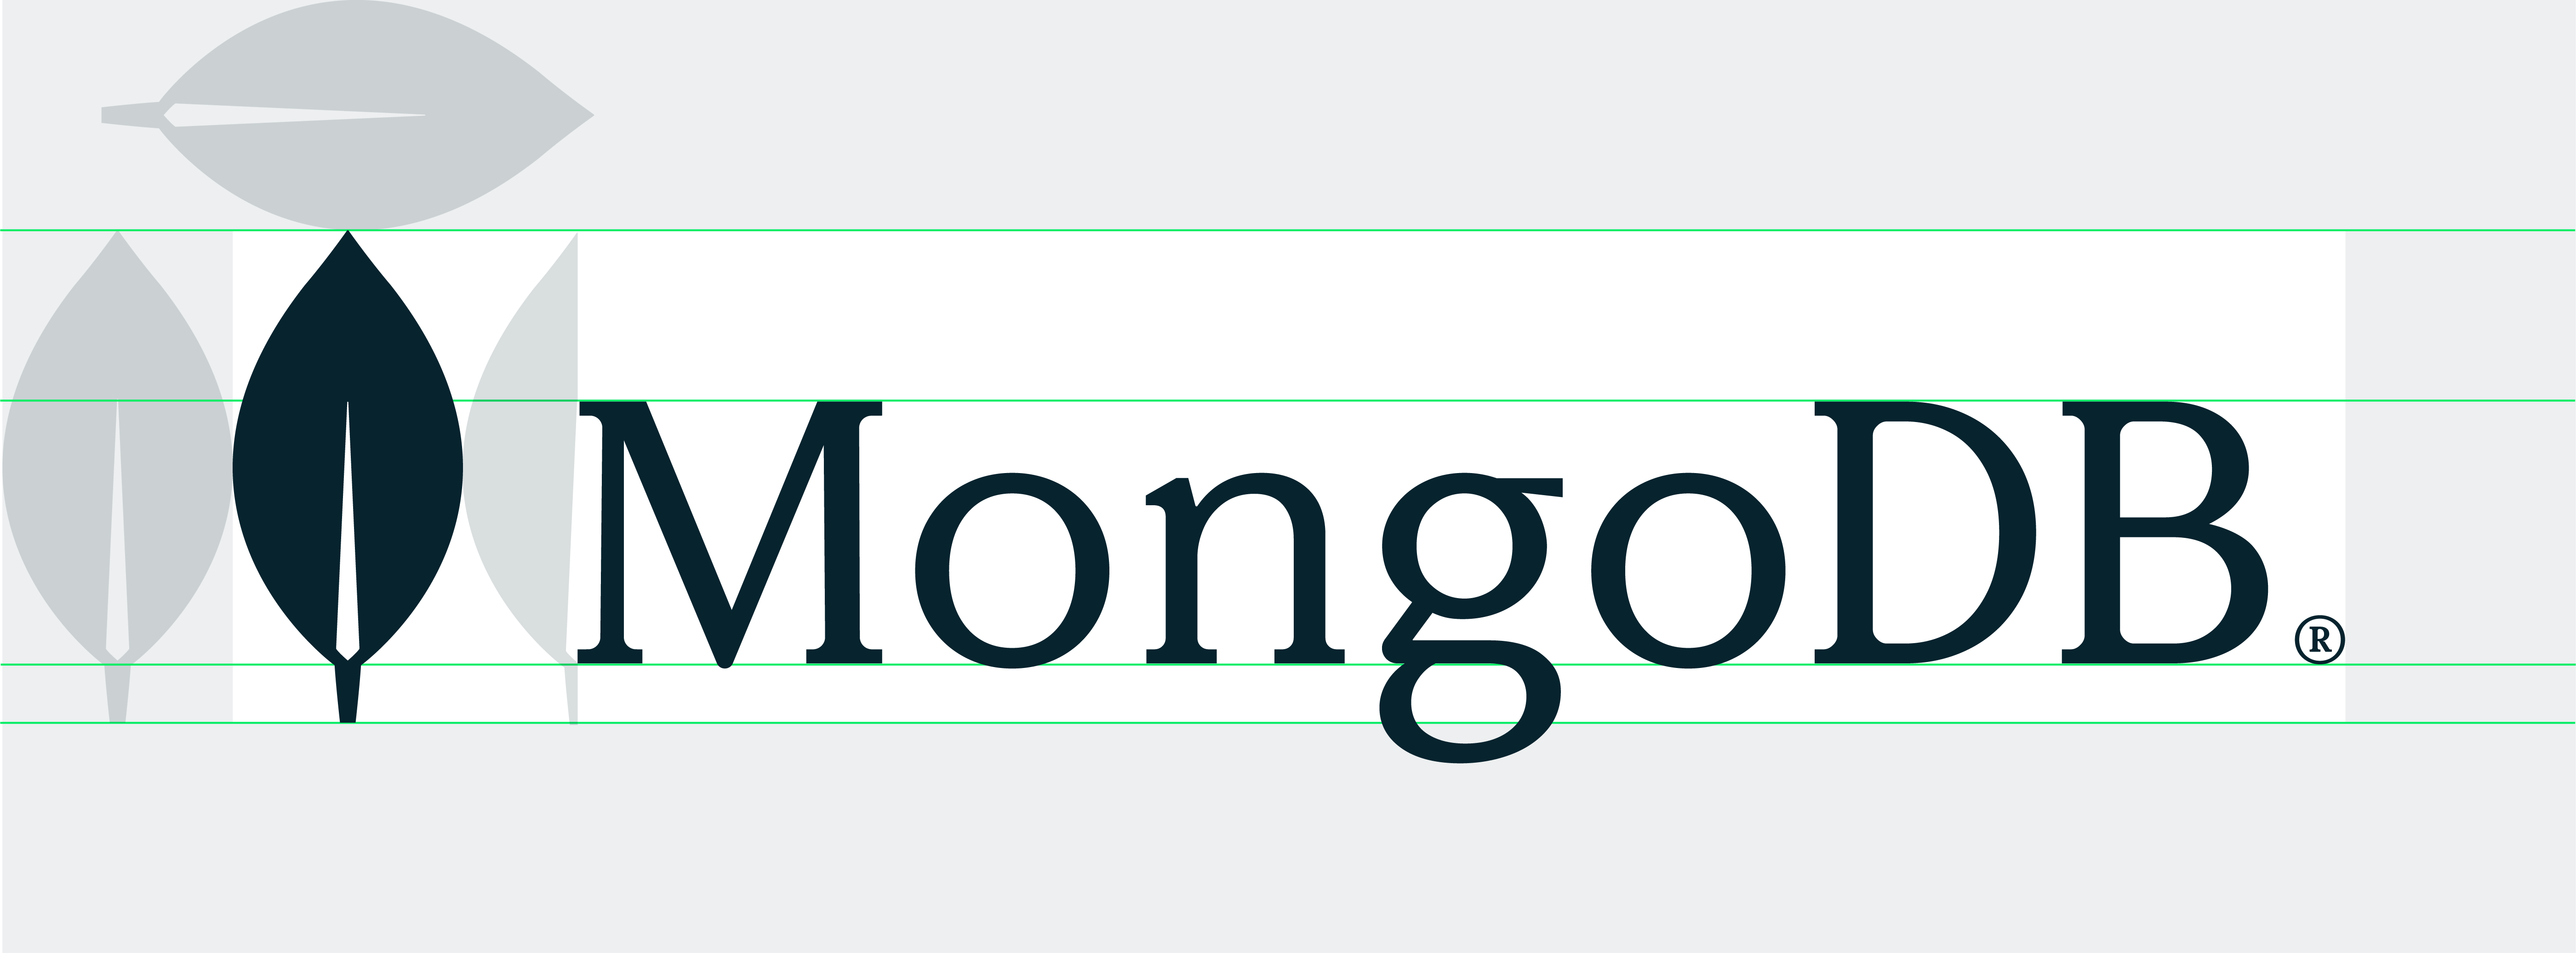 MongoDB_Logo-01